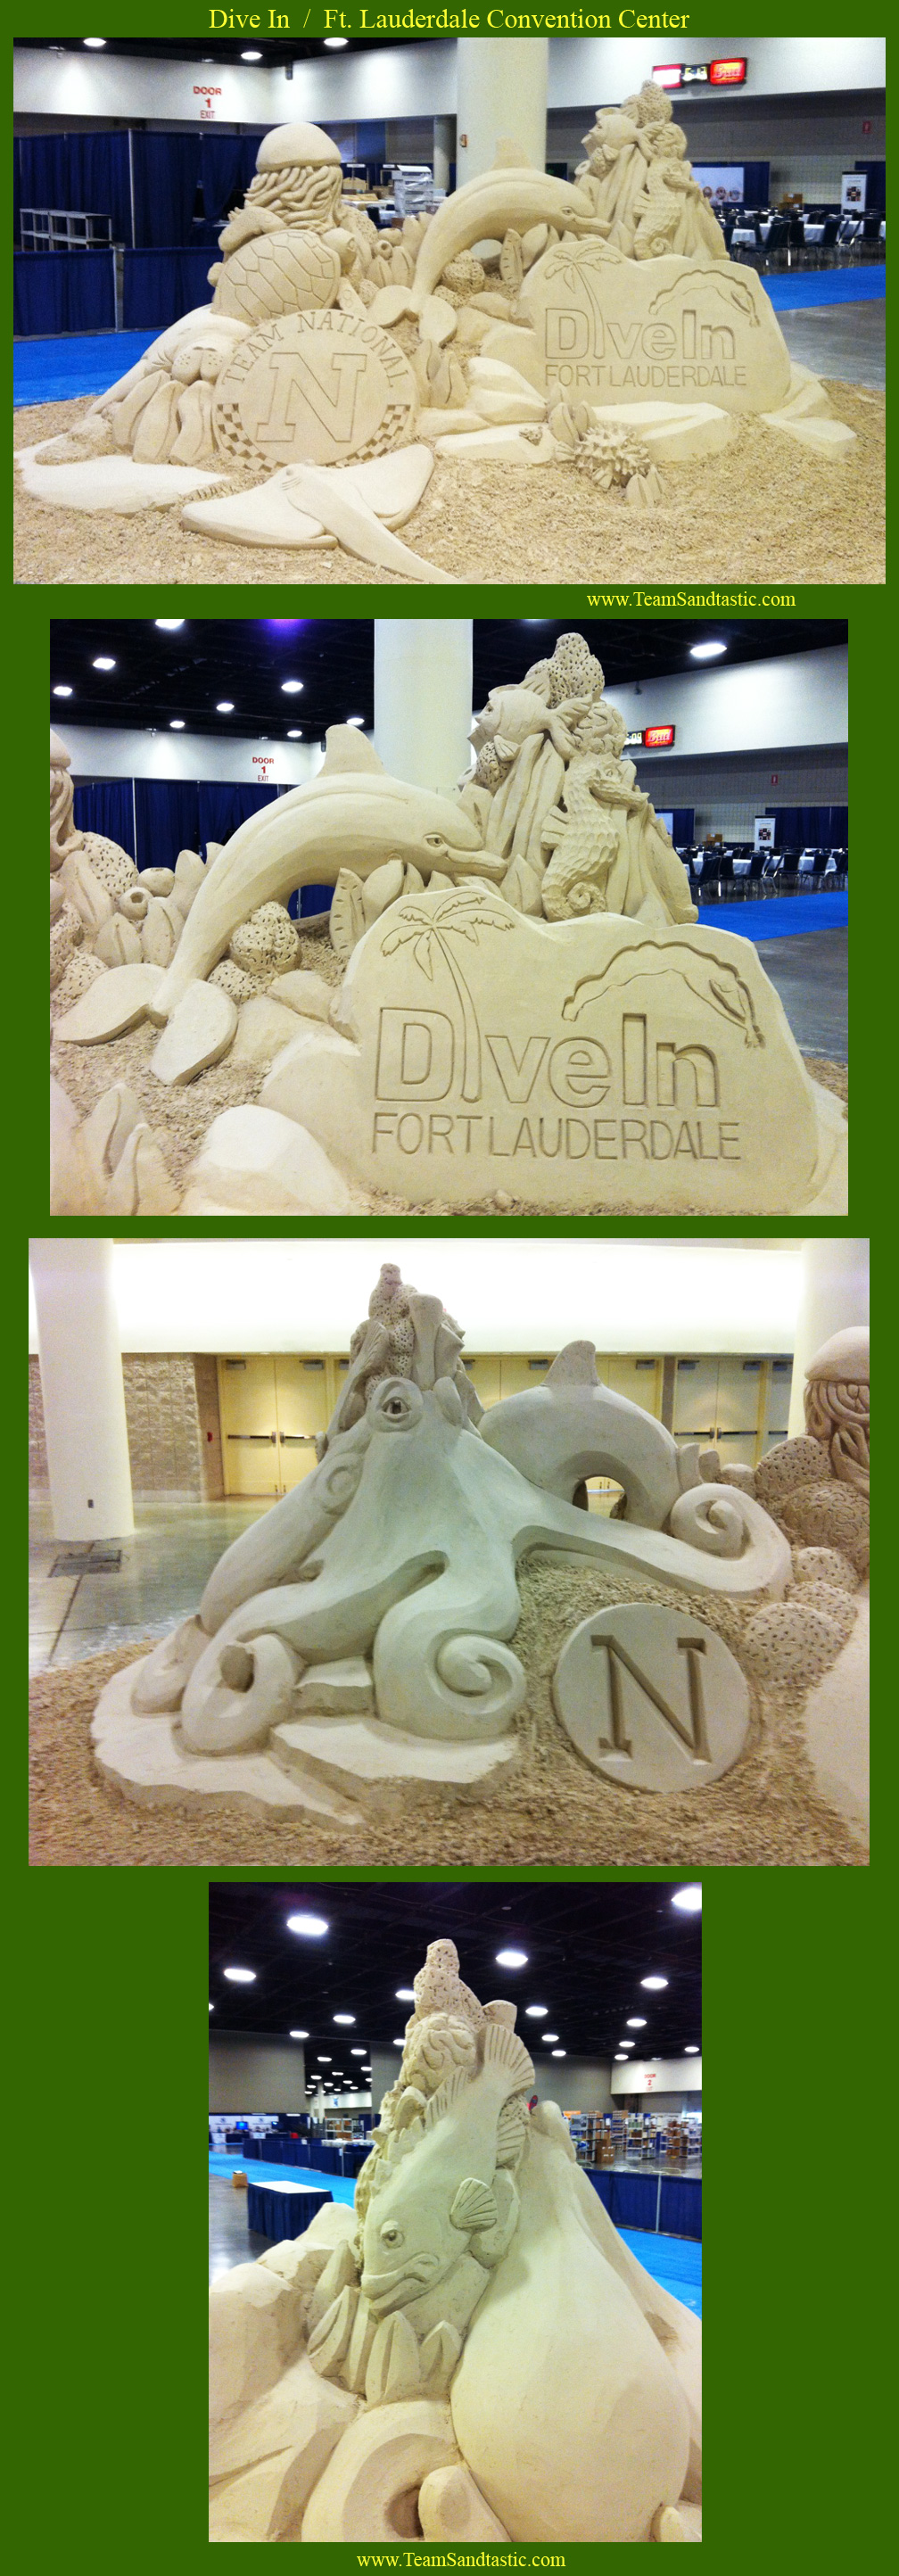 DiveIn Sand Sculpture Fort Lauderdale Convention Center